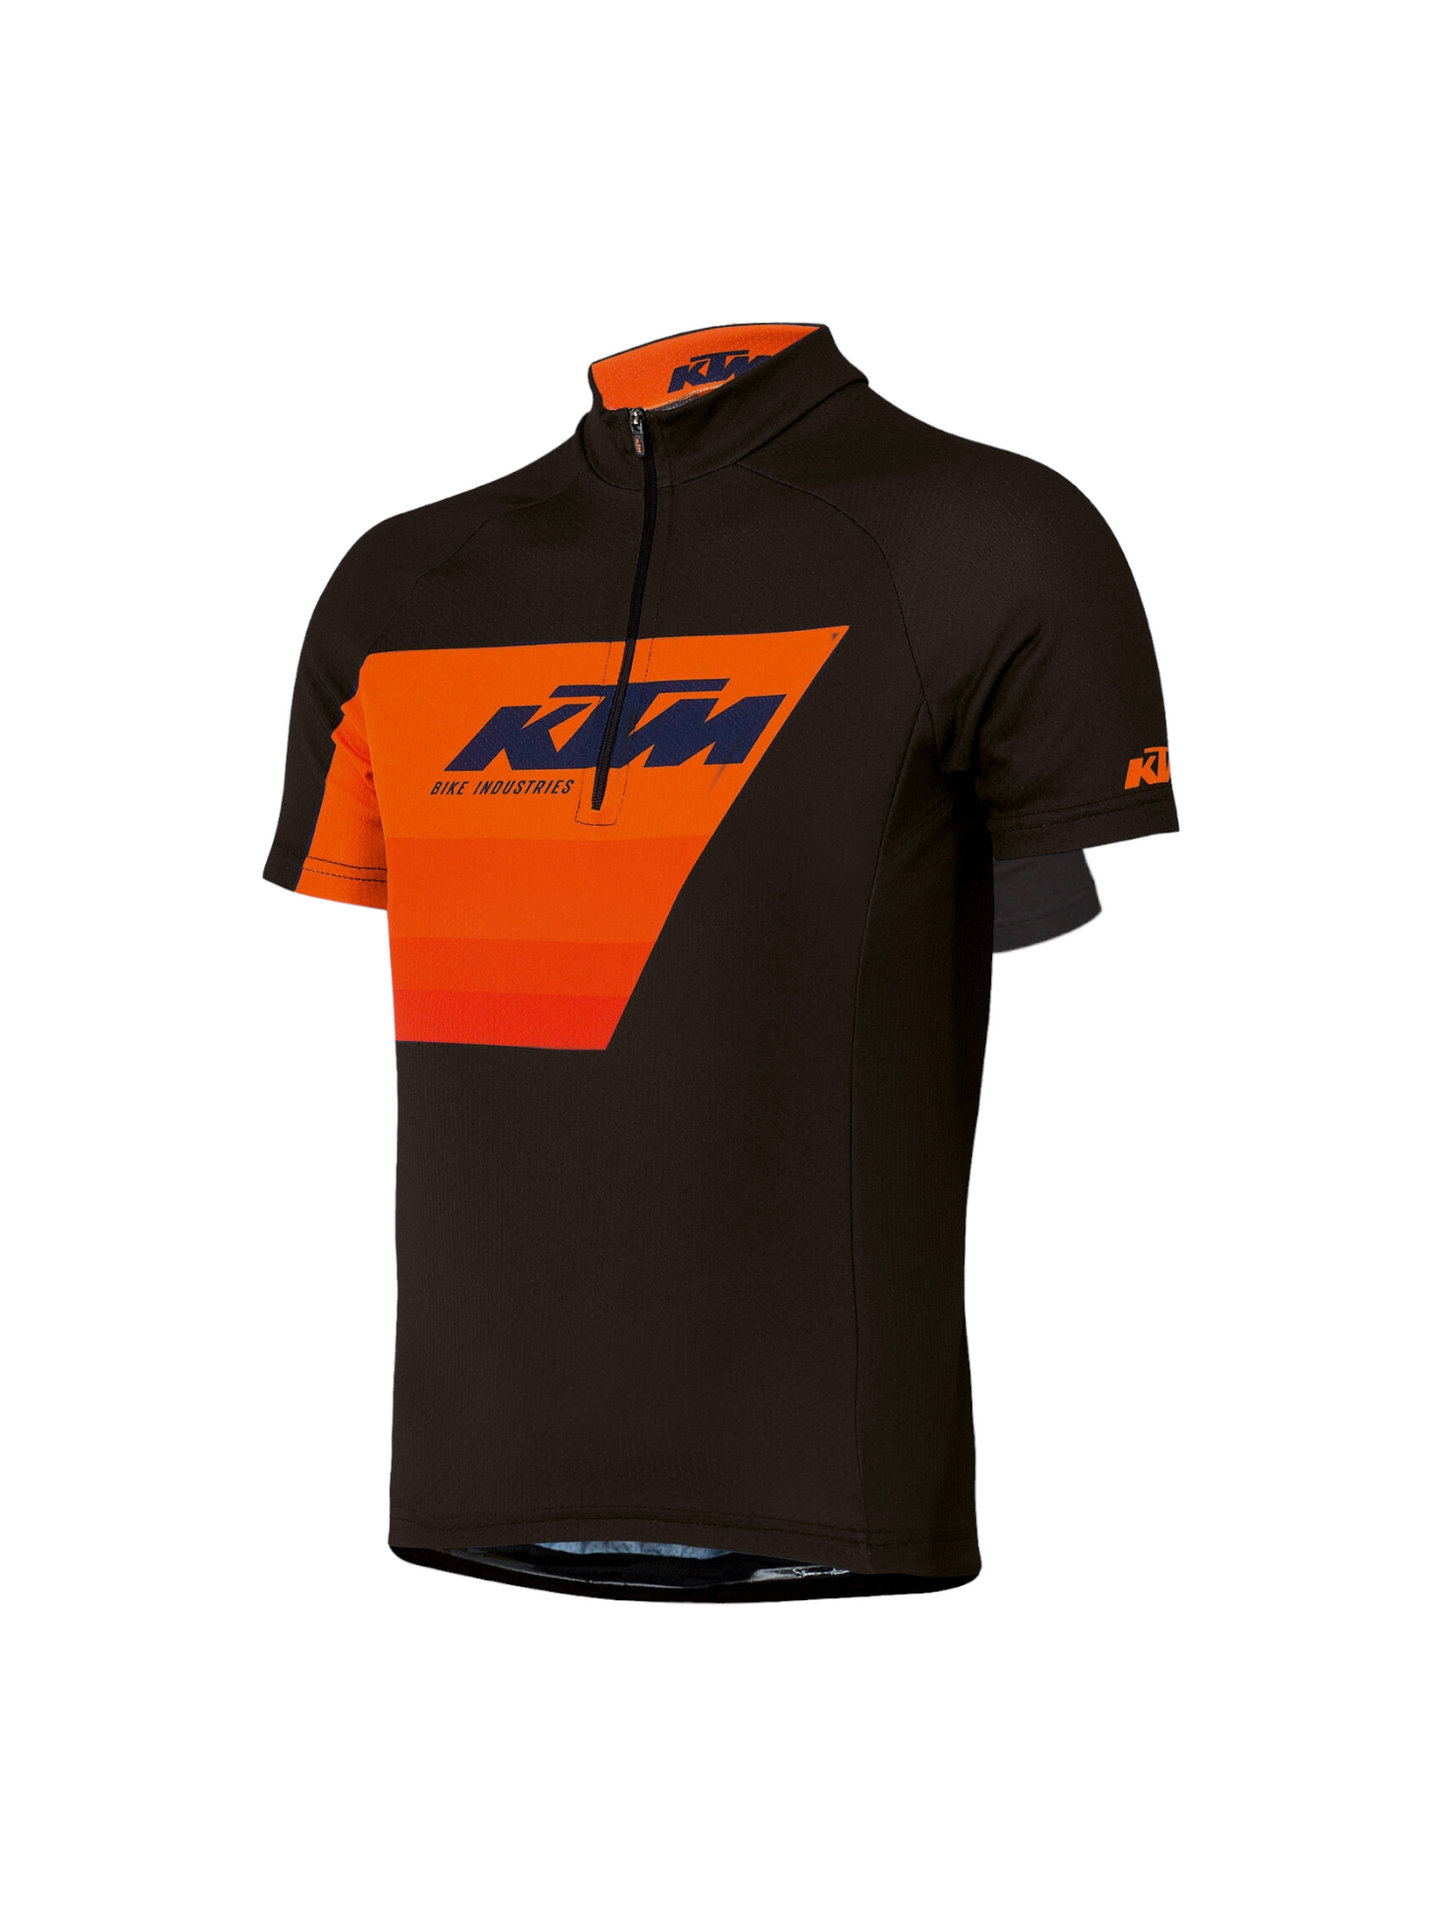 Jersey ciclismo KTM manga corta Factory Line naranja/negro